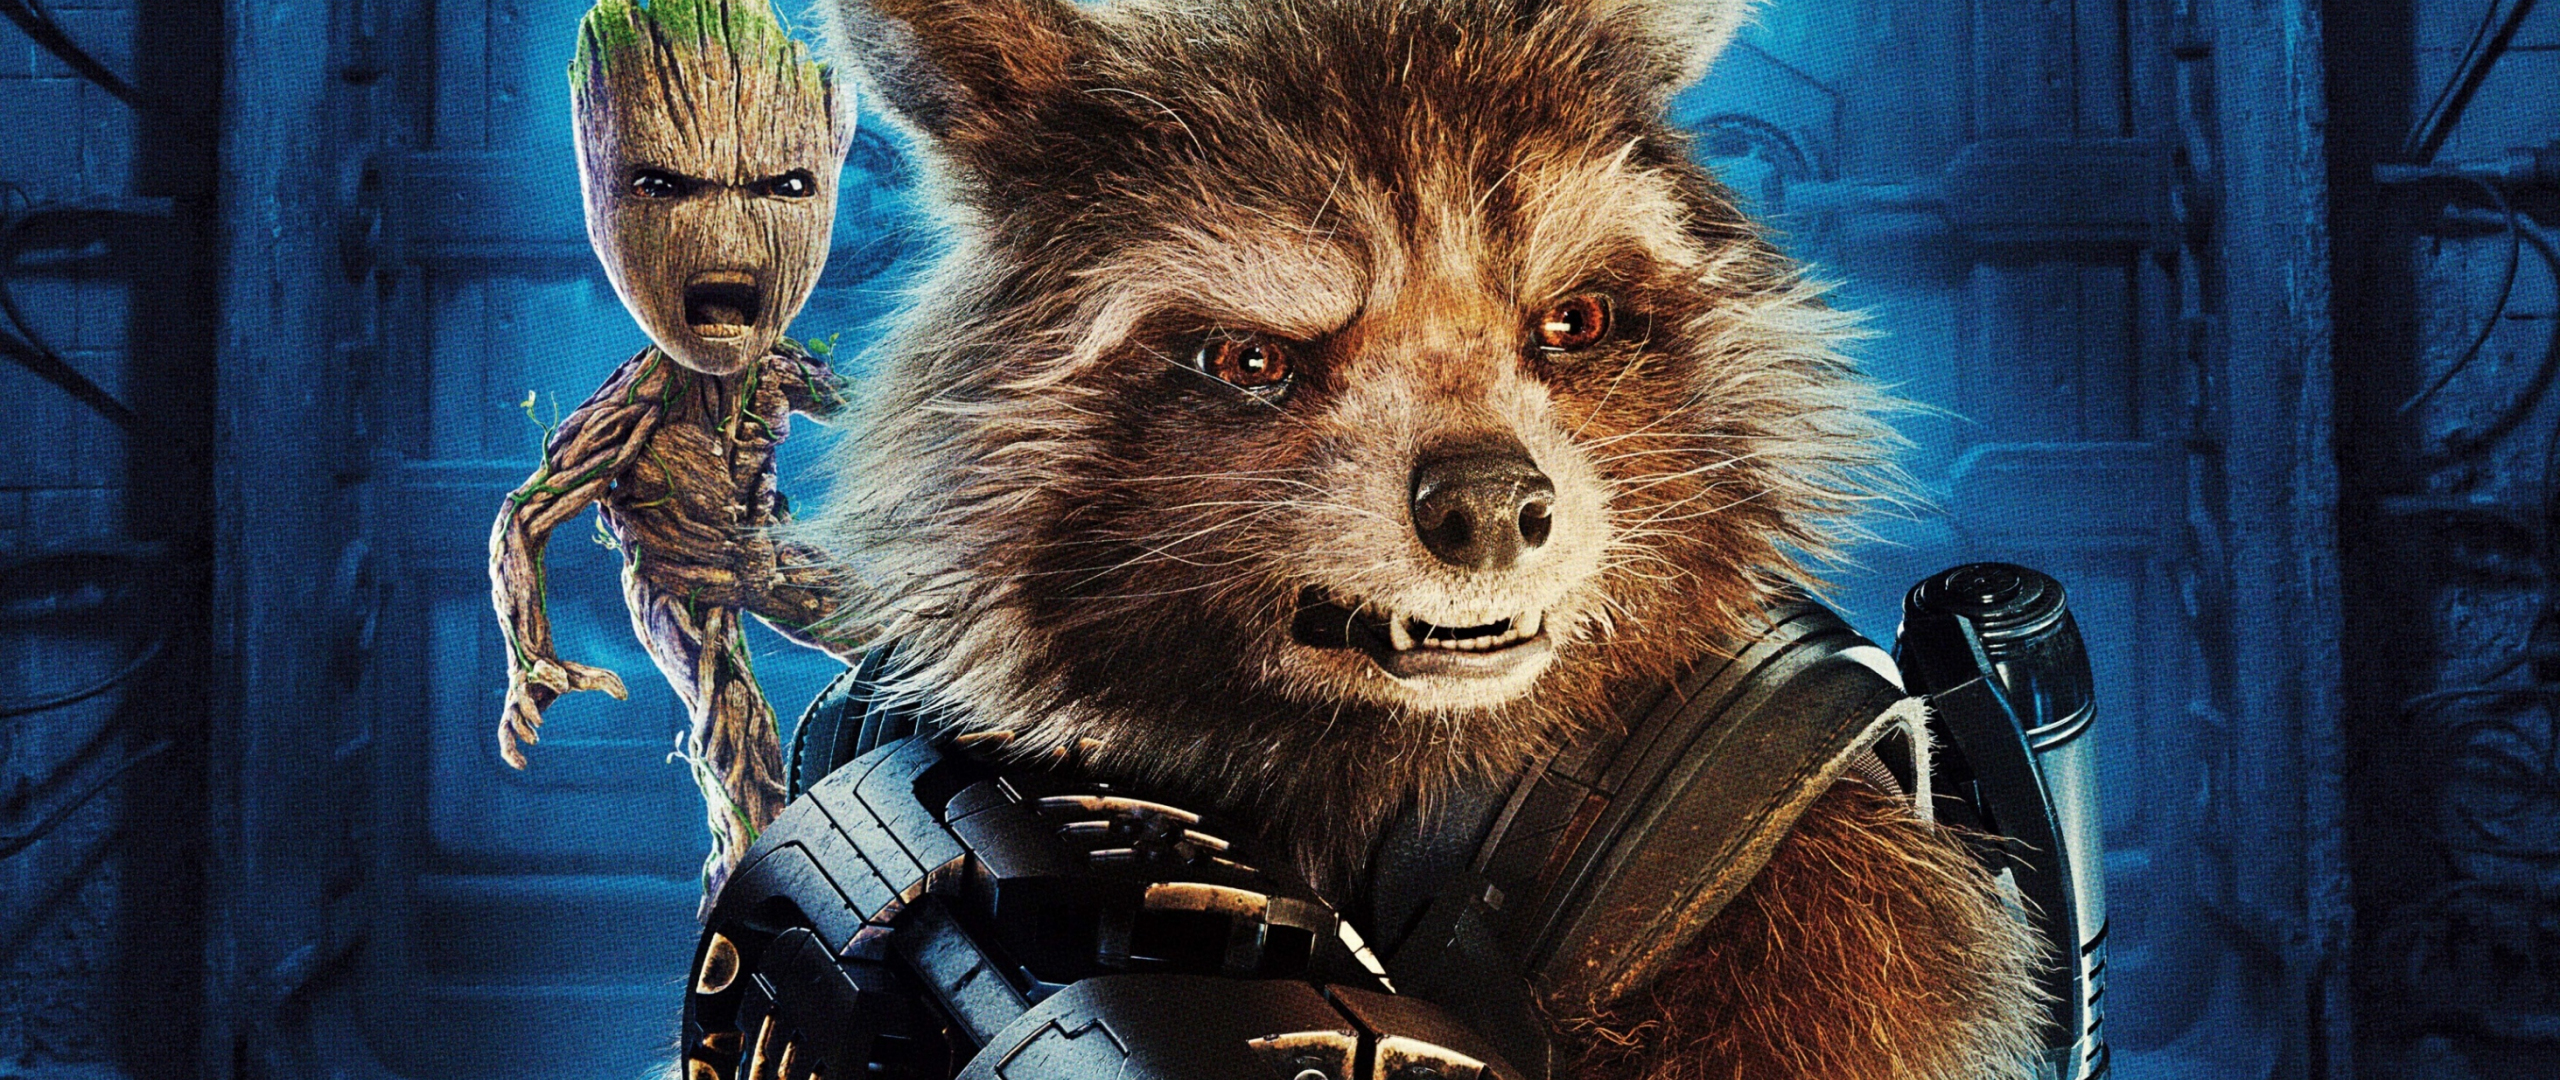 Desktop Wallpaper Baby Groot, Guardians Of The Galaxy Vol. Movie, Rocket Raccoon, HD Image, Picture, Background, Irvdzc